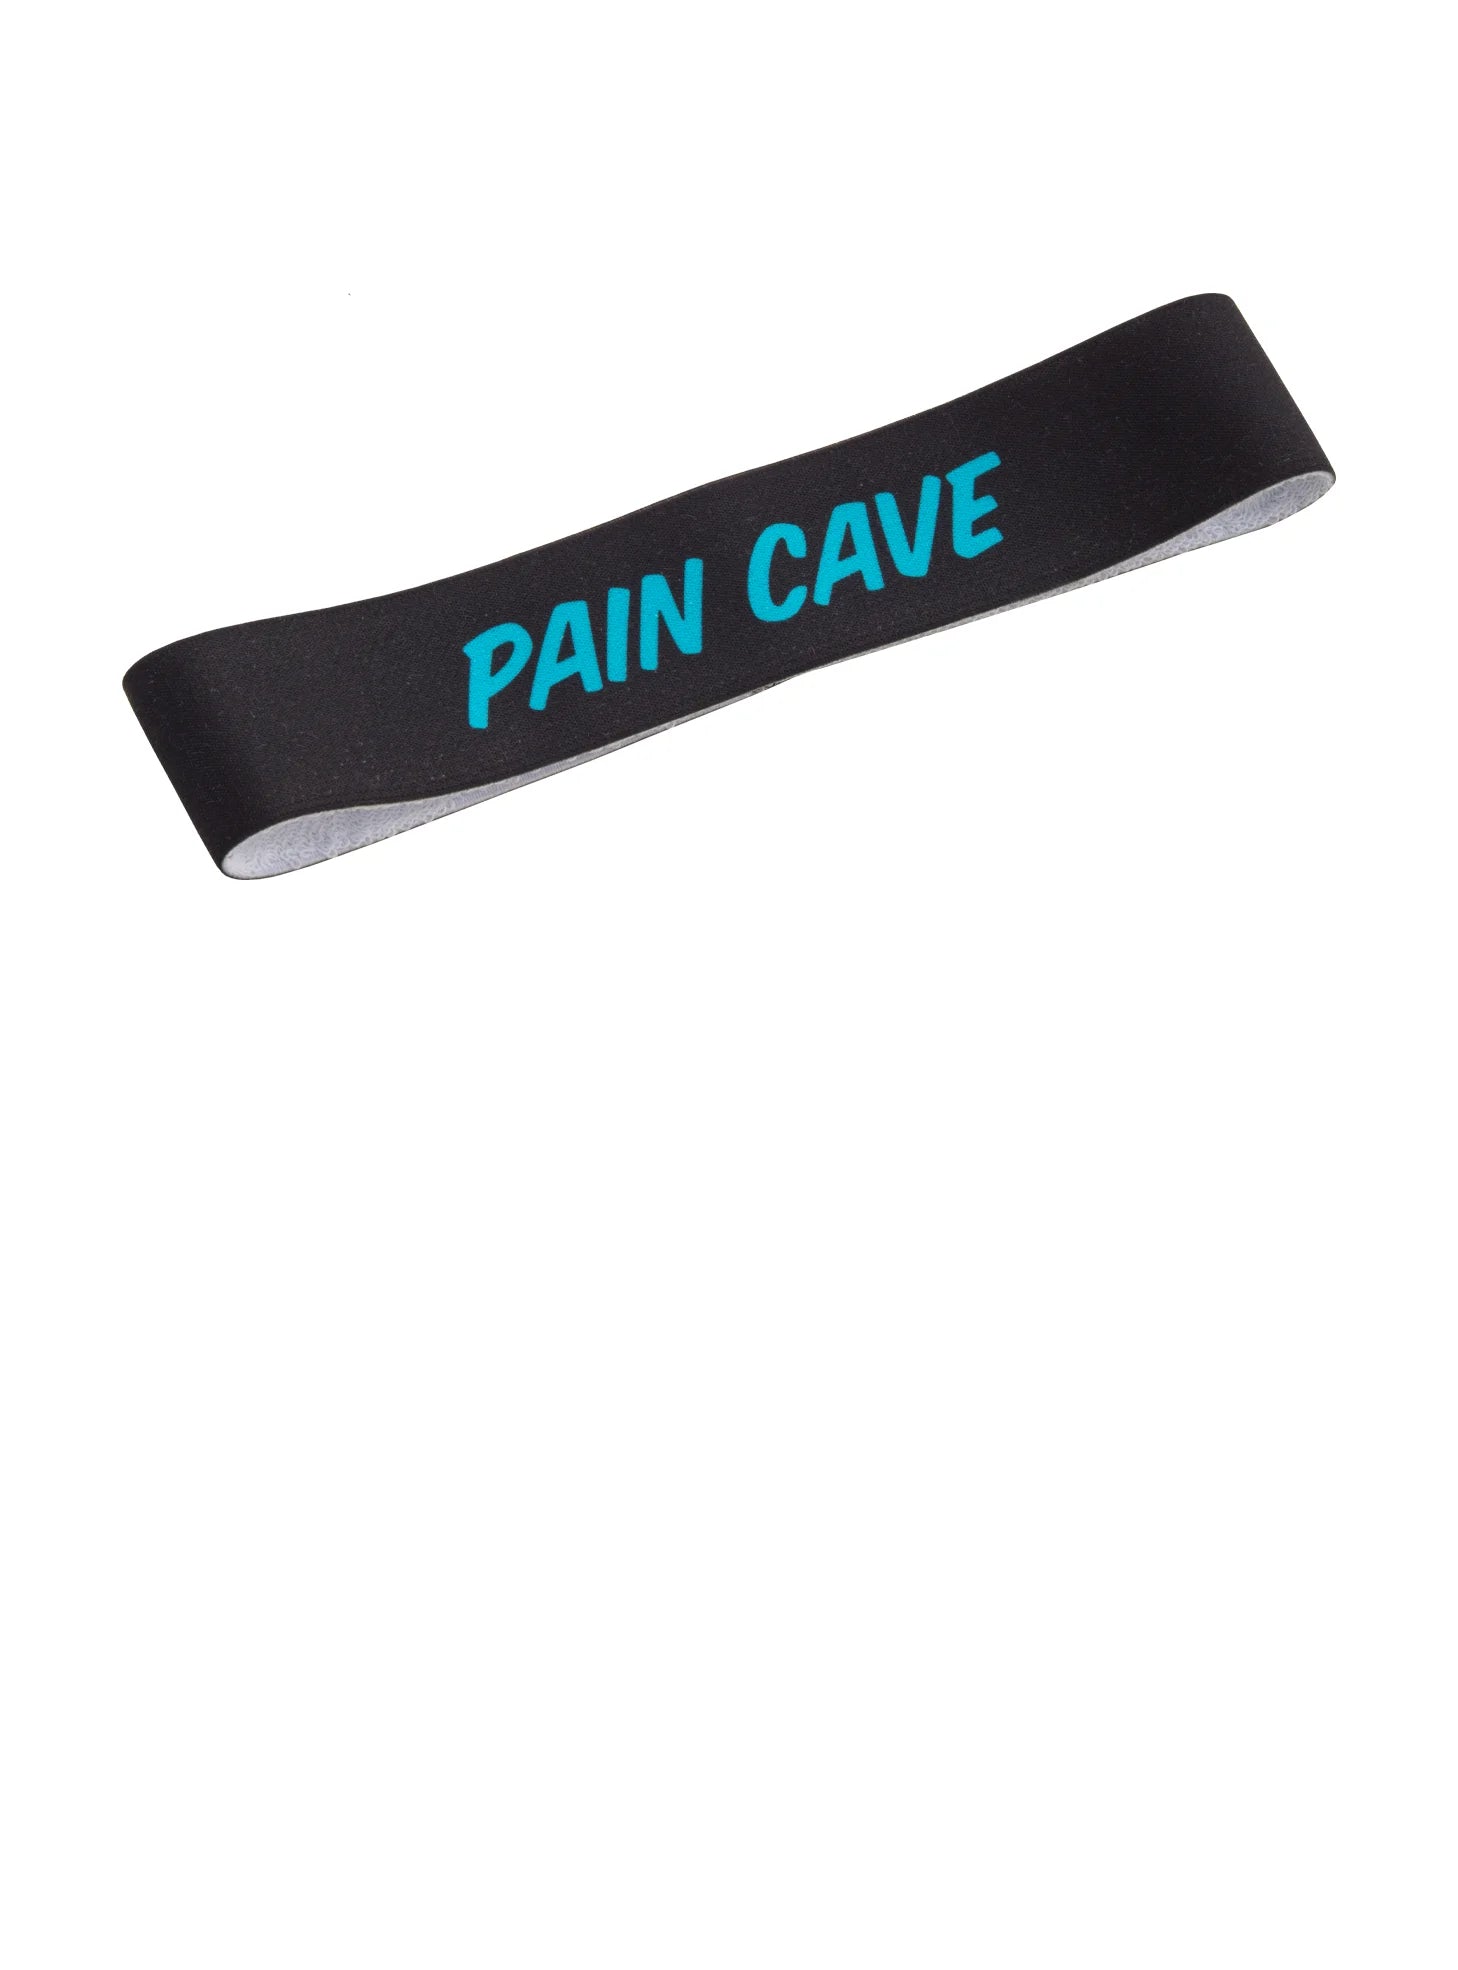 PAIN CAVE KIT With FREE TURBO Towel & Headband - MEN BLACK